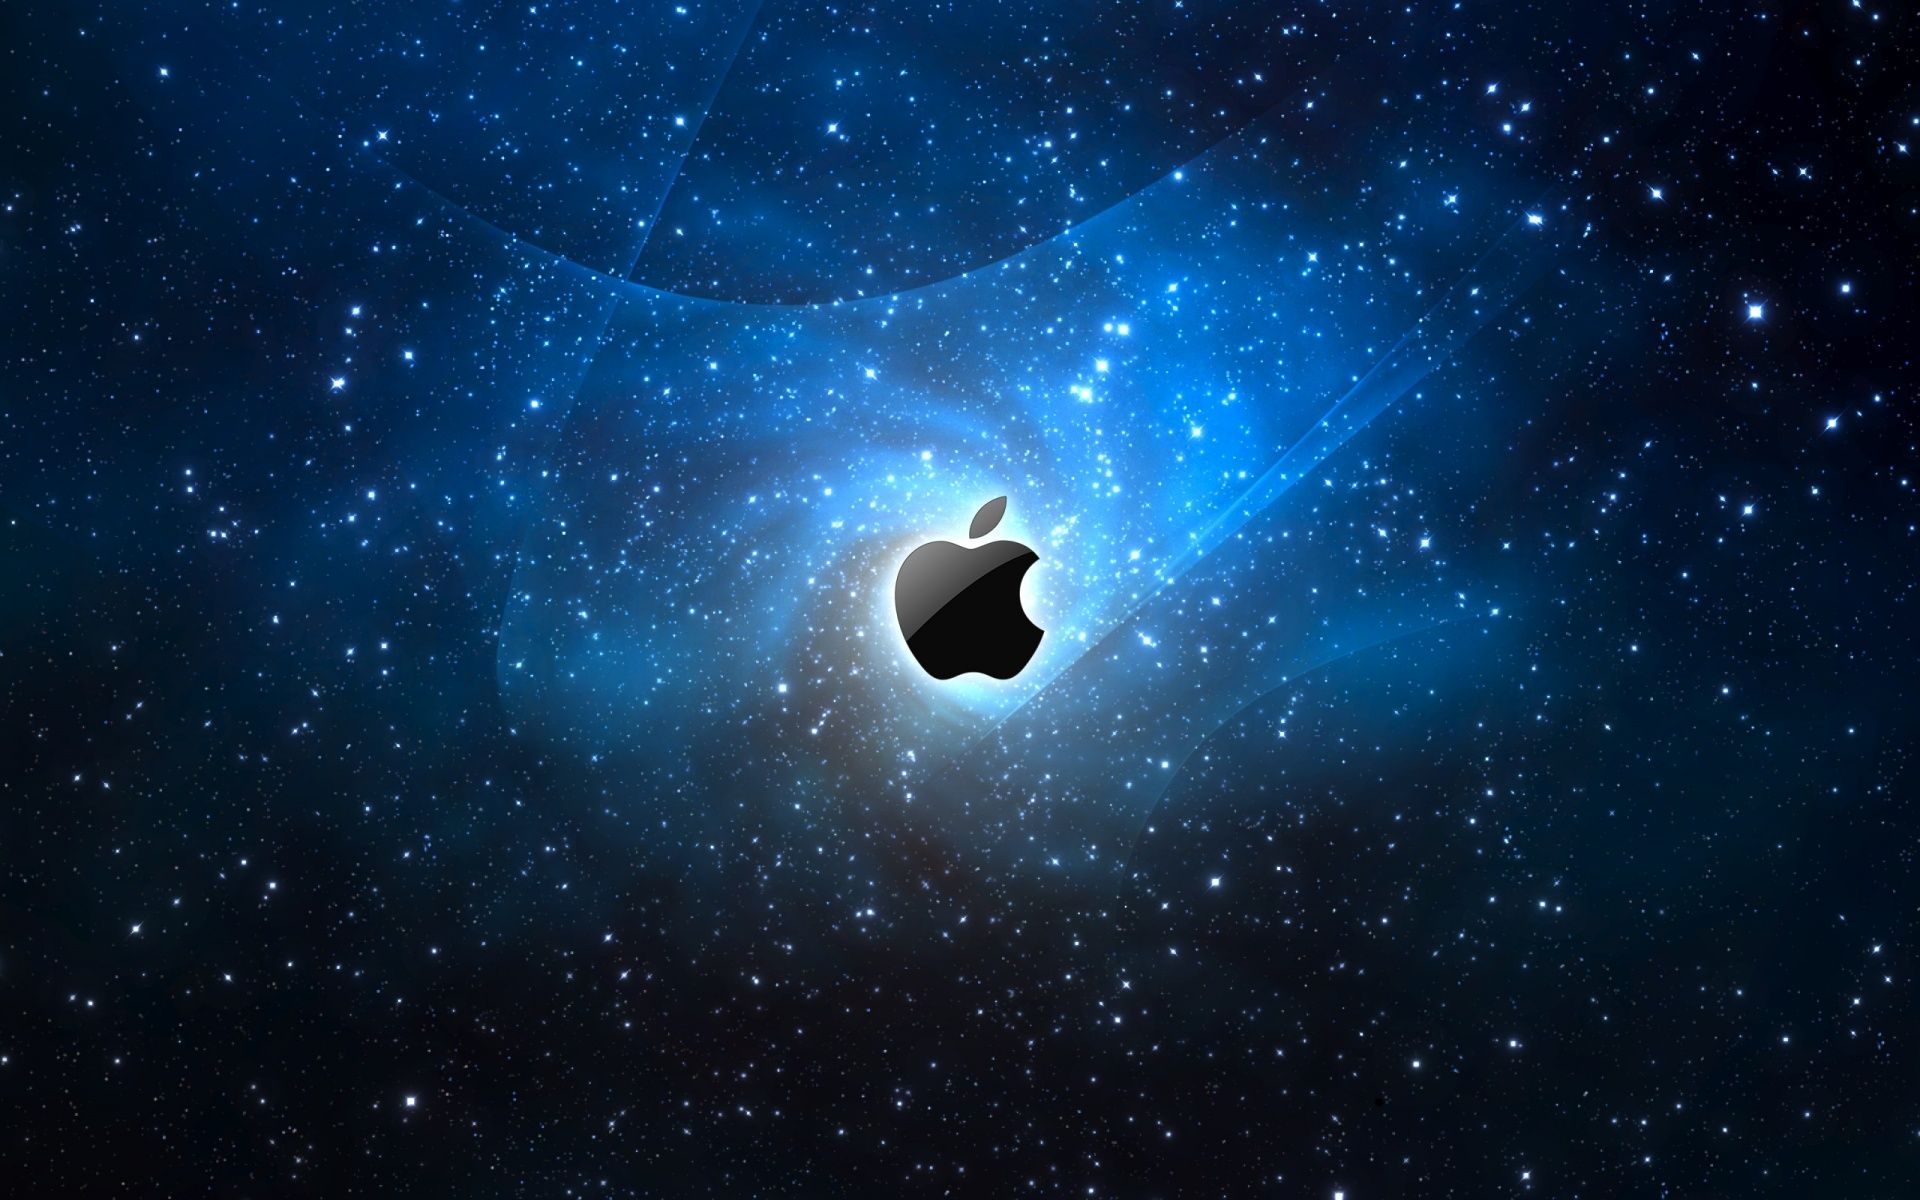 Cool Apple Logos - wallpaper.